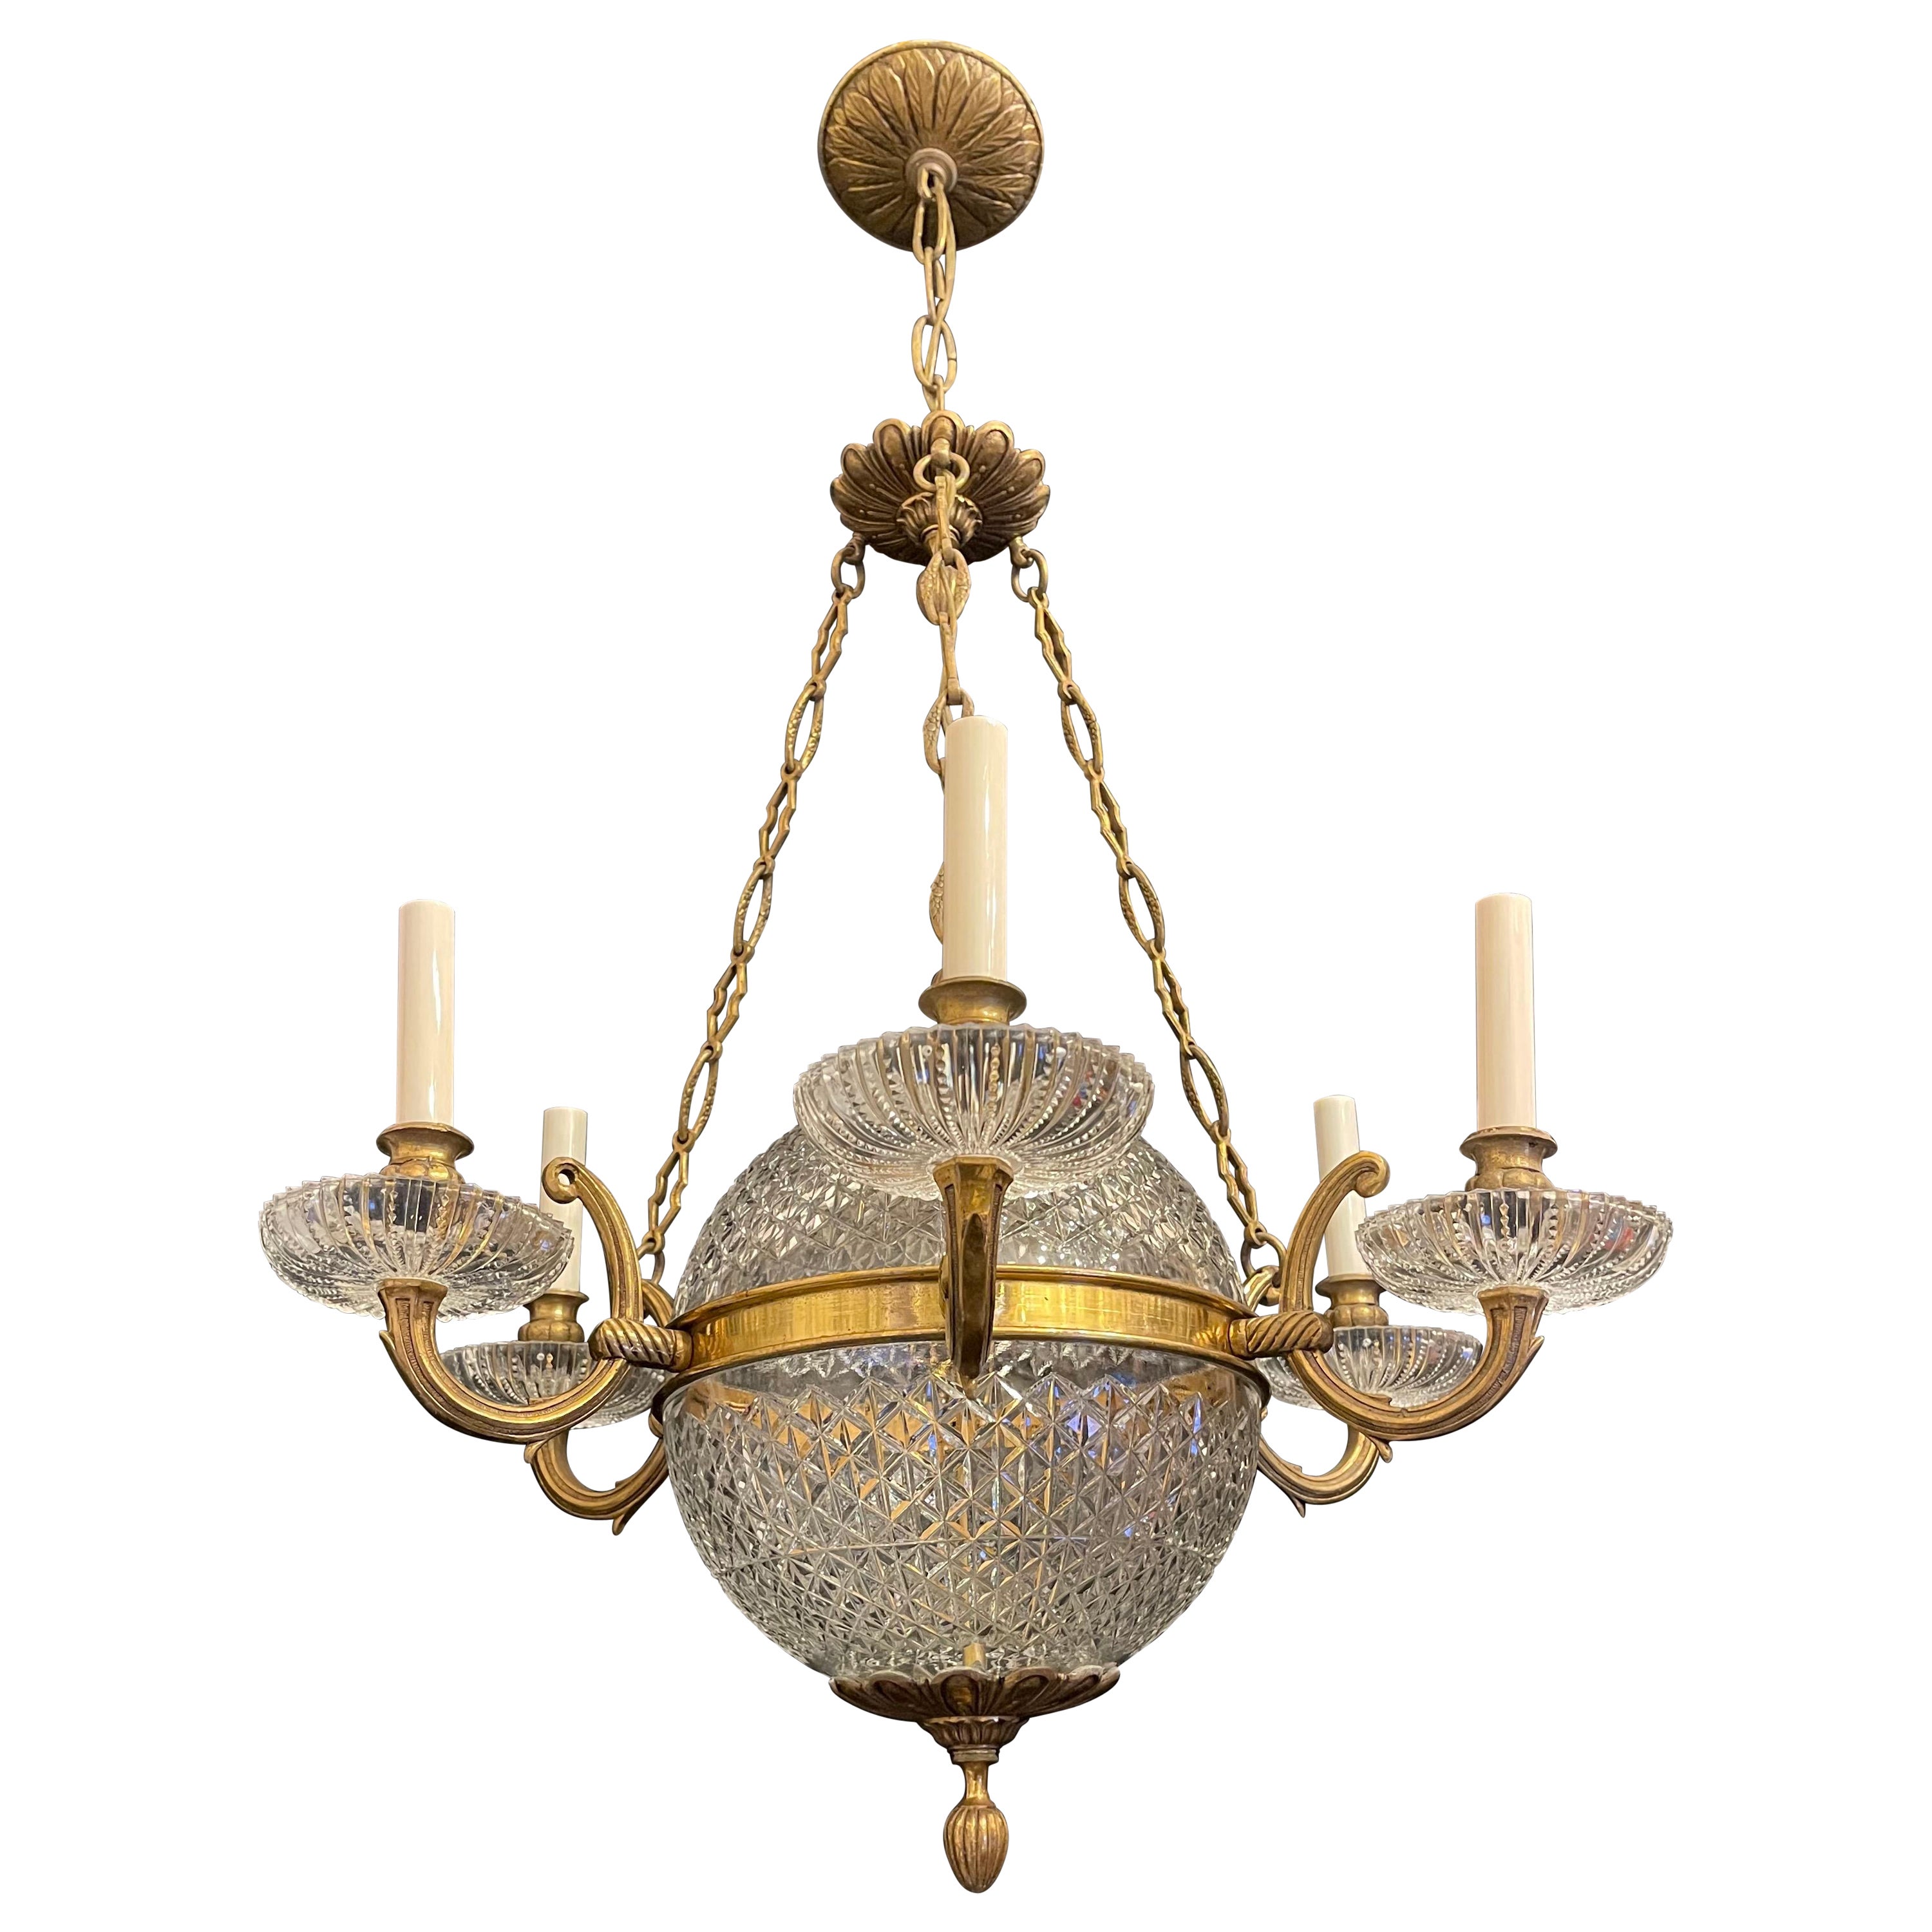 Wonderful French Bronze Crystal Neoclassical Empire Regency Orb Ball Chandelier